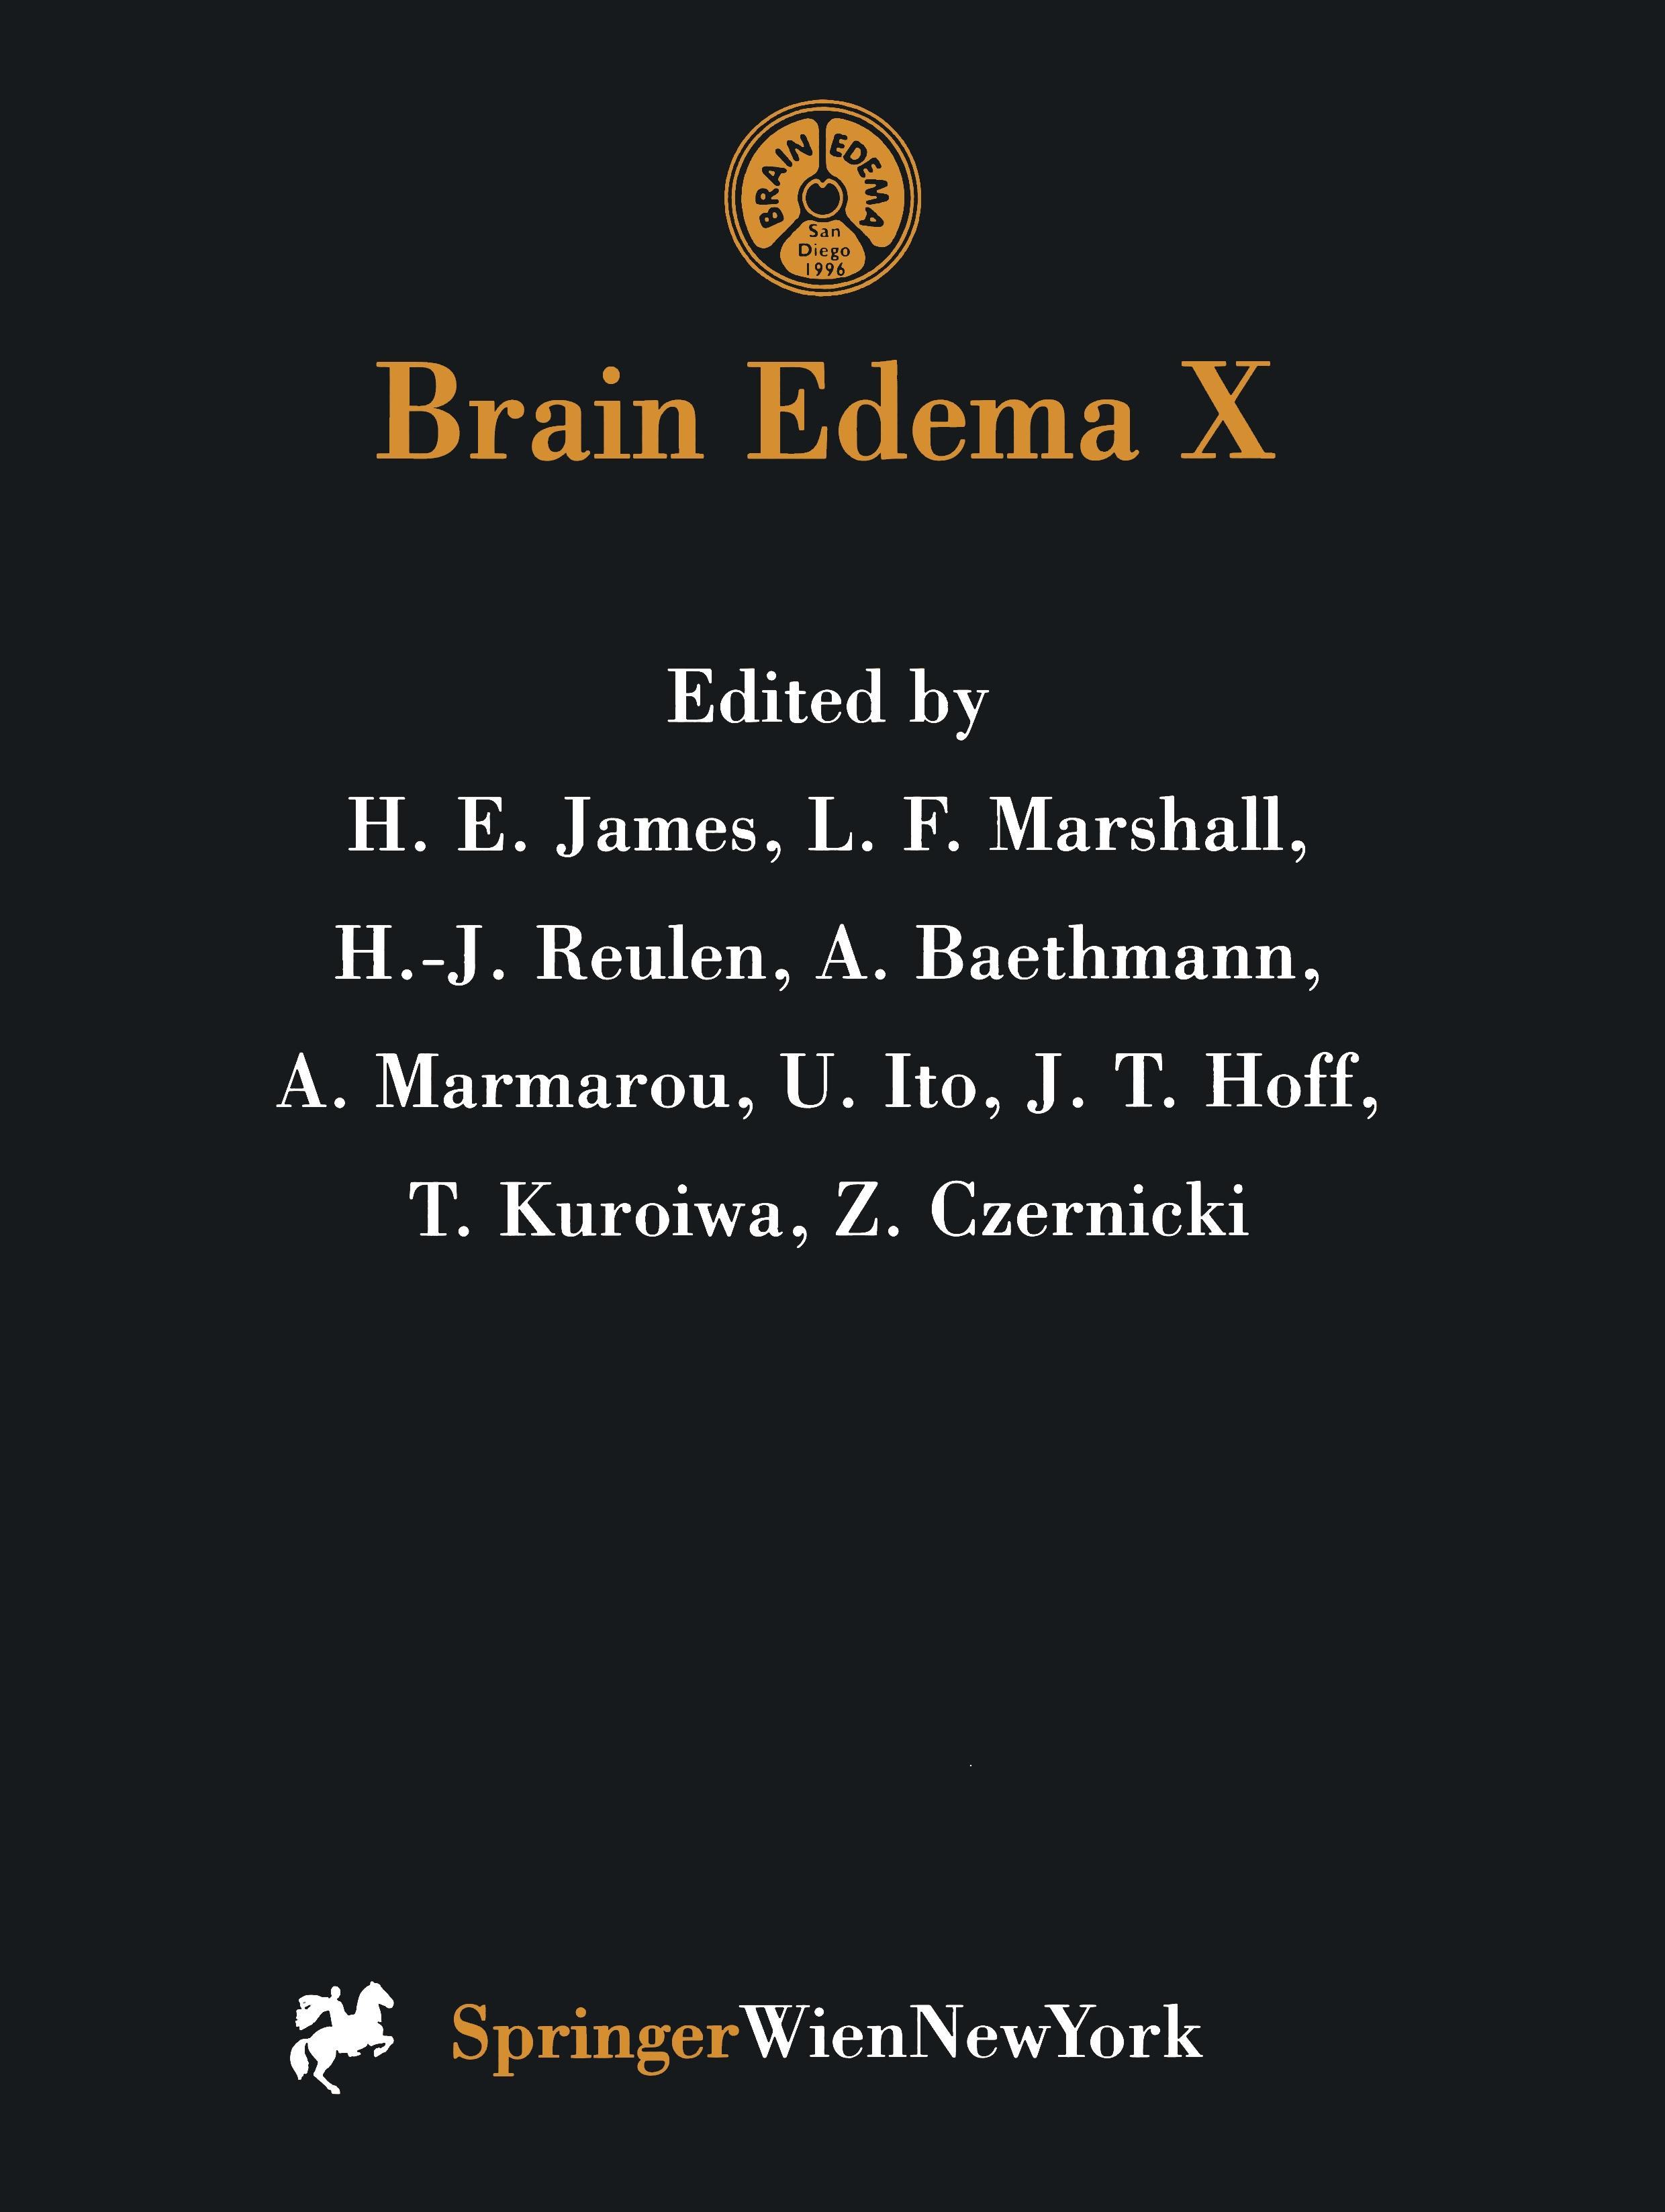 Brain Edema X - James, H. E.|Marshall, L. F.|Reulen, H. J.|Baethmann, A.|Marmarou, A.|Ito, U.|Hoff, J. T.|Kuroiwa, T.|Czernicki, Z.